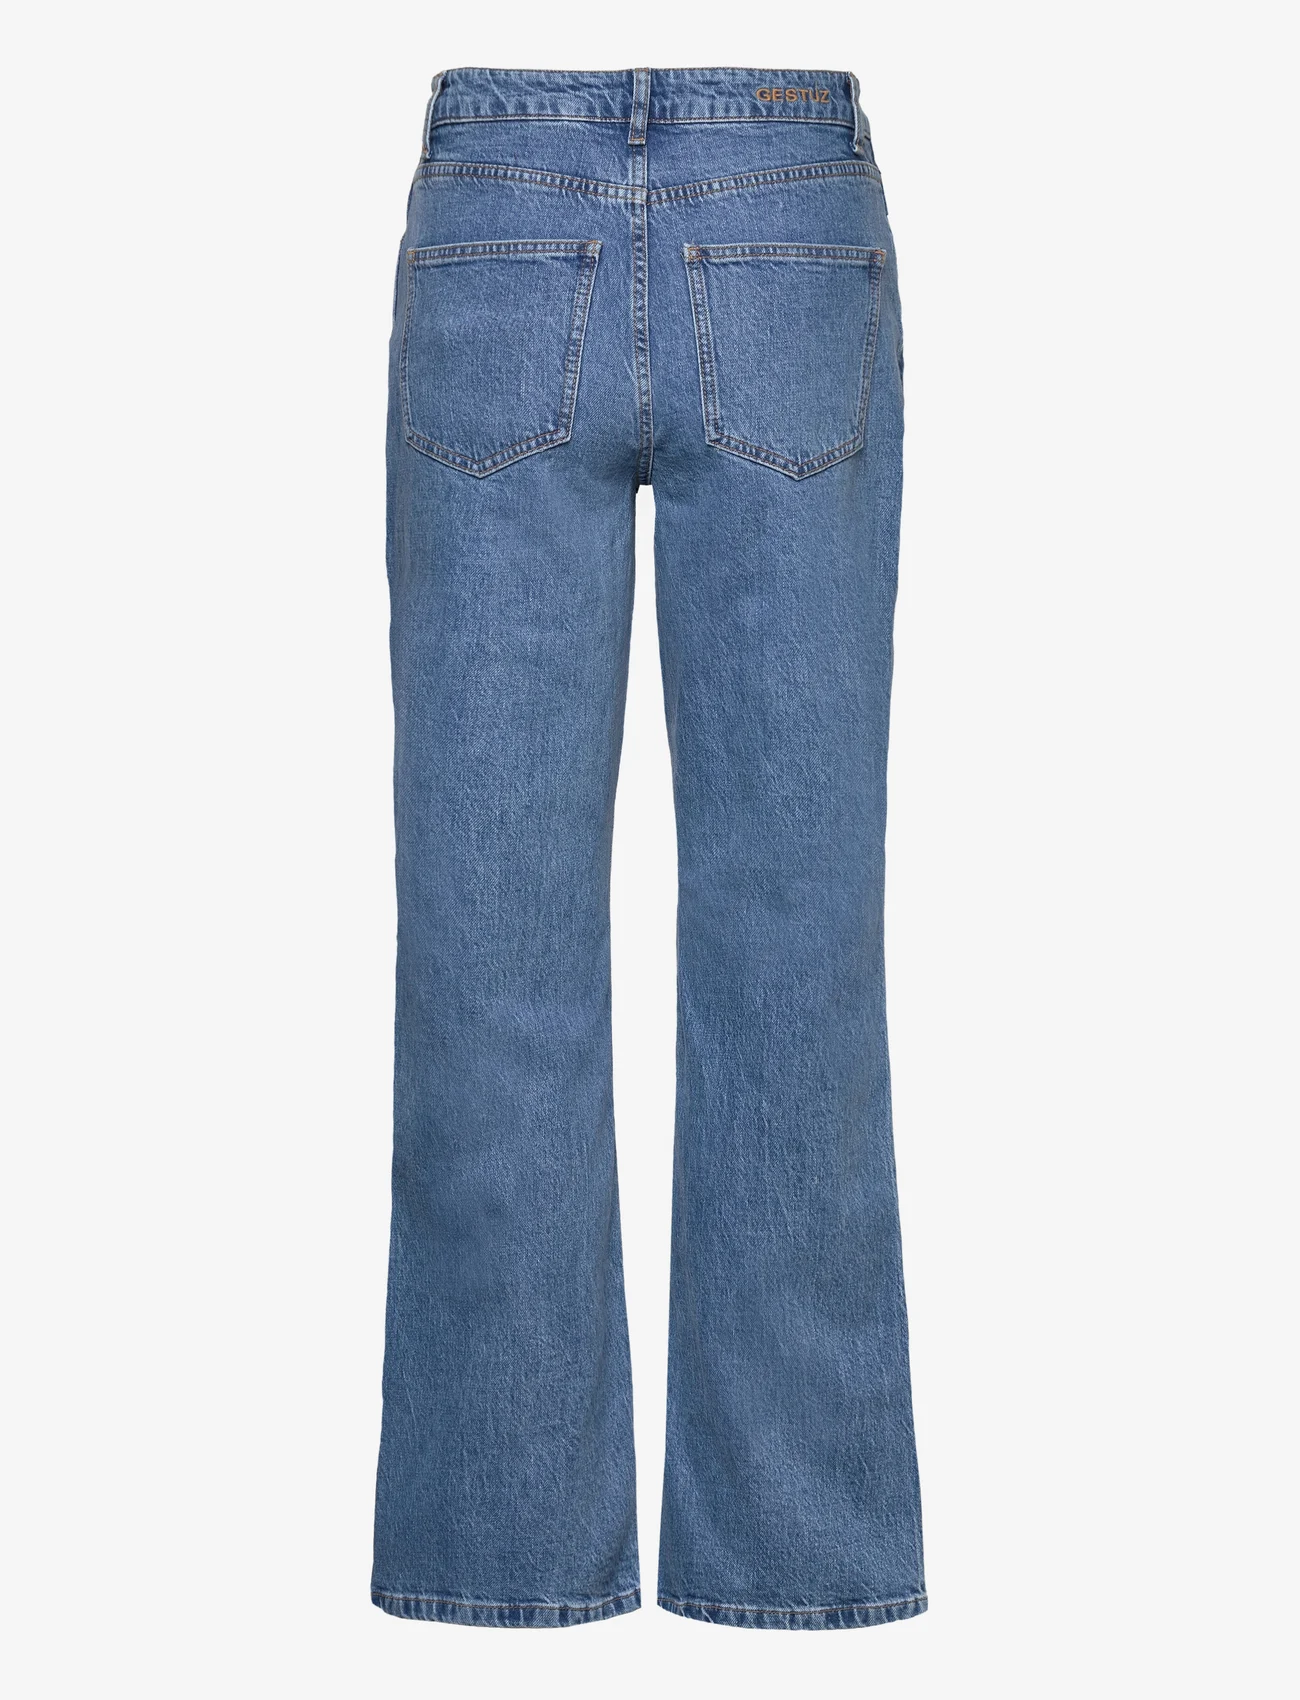 Gestuz - LucieGZ HW straight jeans NOOS - tiesaus kirpimo džinsai - mid dark blue washed - 1